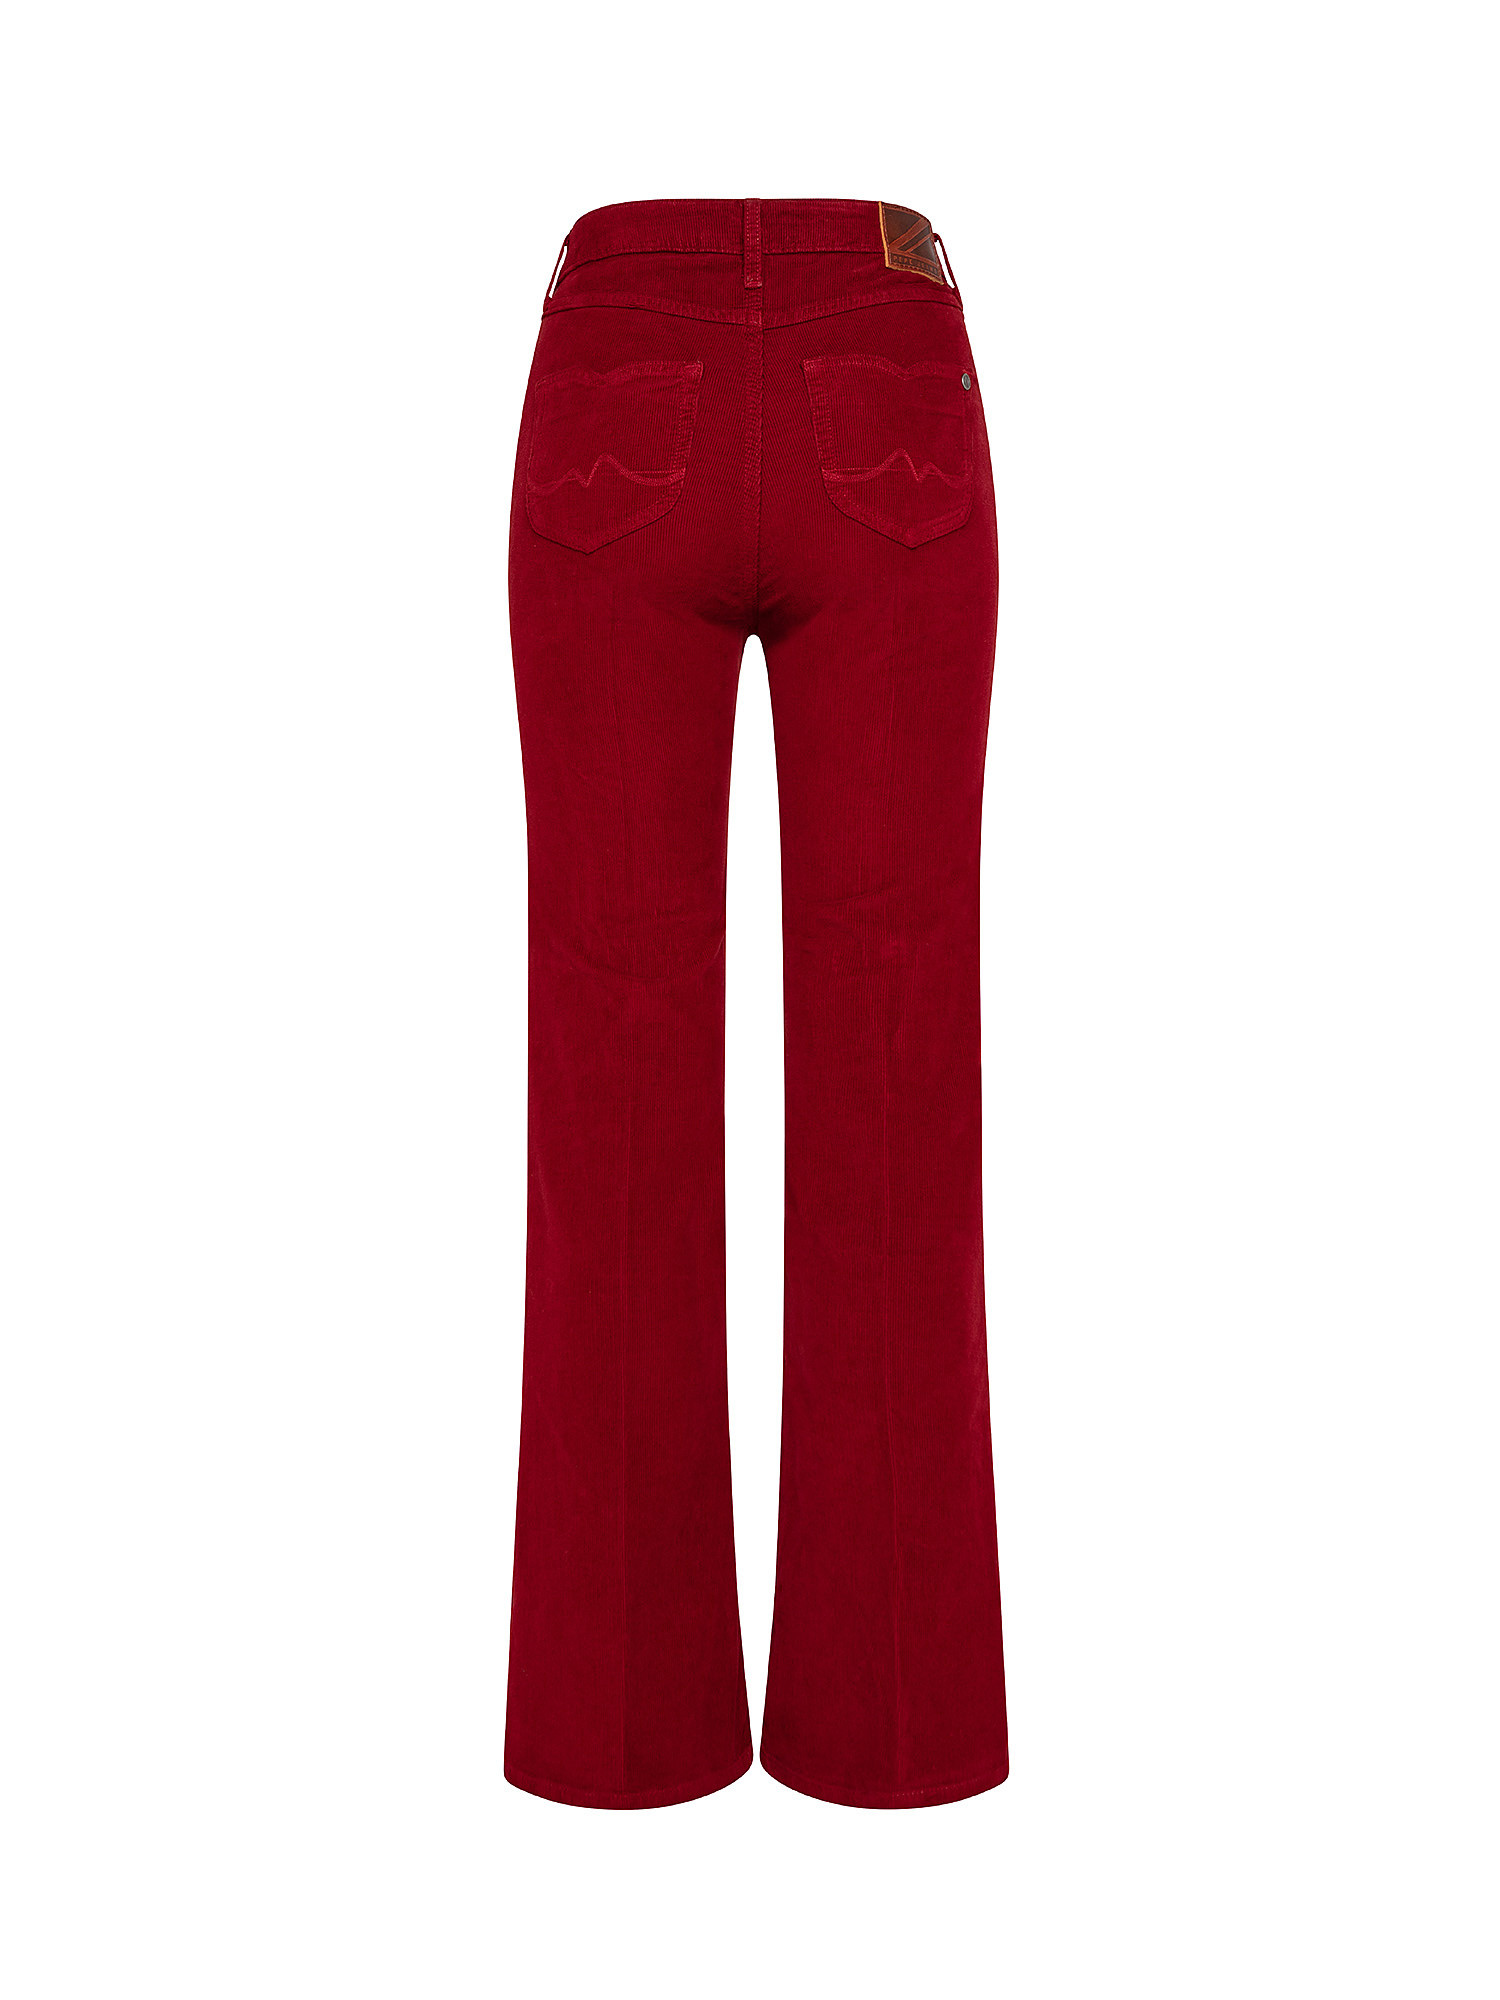 Pantaloni Willa, Rosso mattone, large image number 1